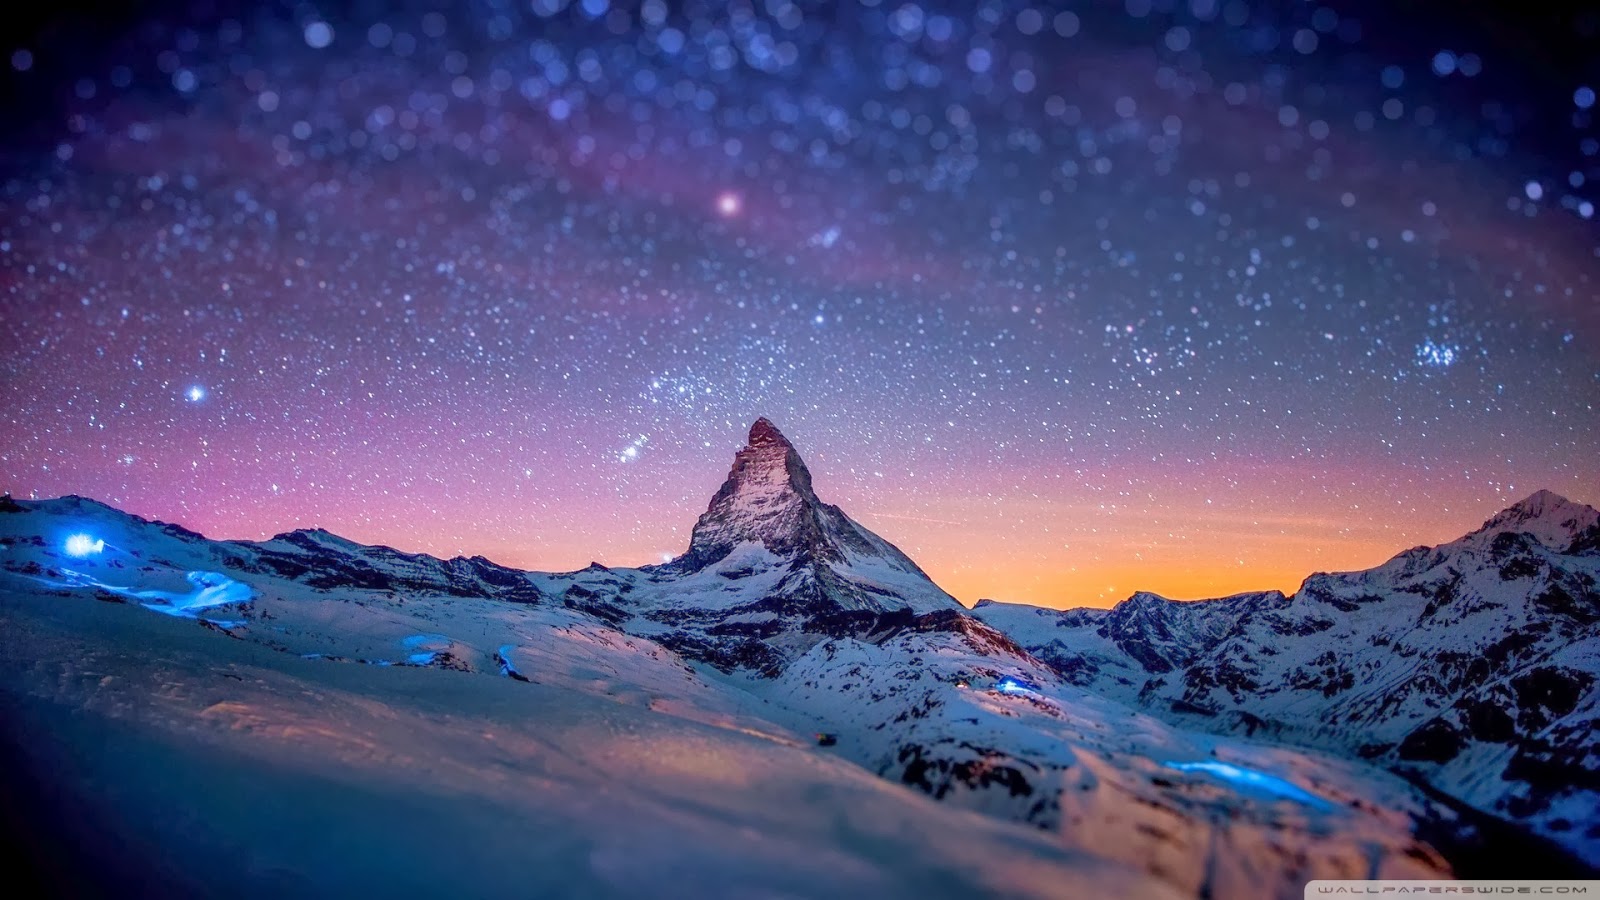  Magic Winter Mountain Wallpaper Desktop Wallpapers and Backgrounds